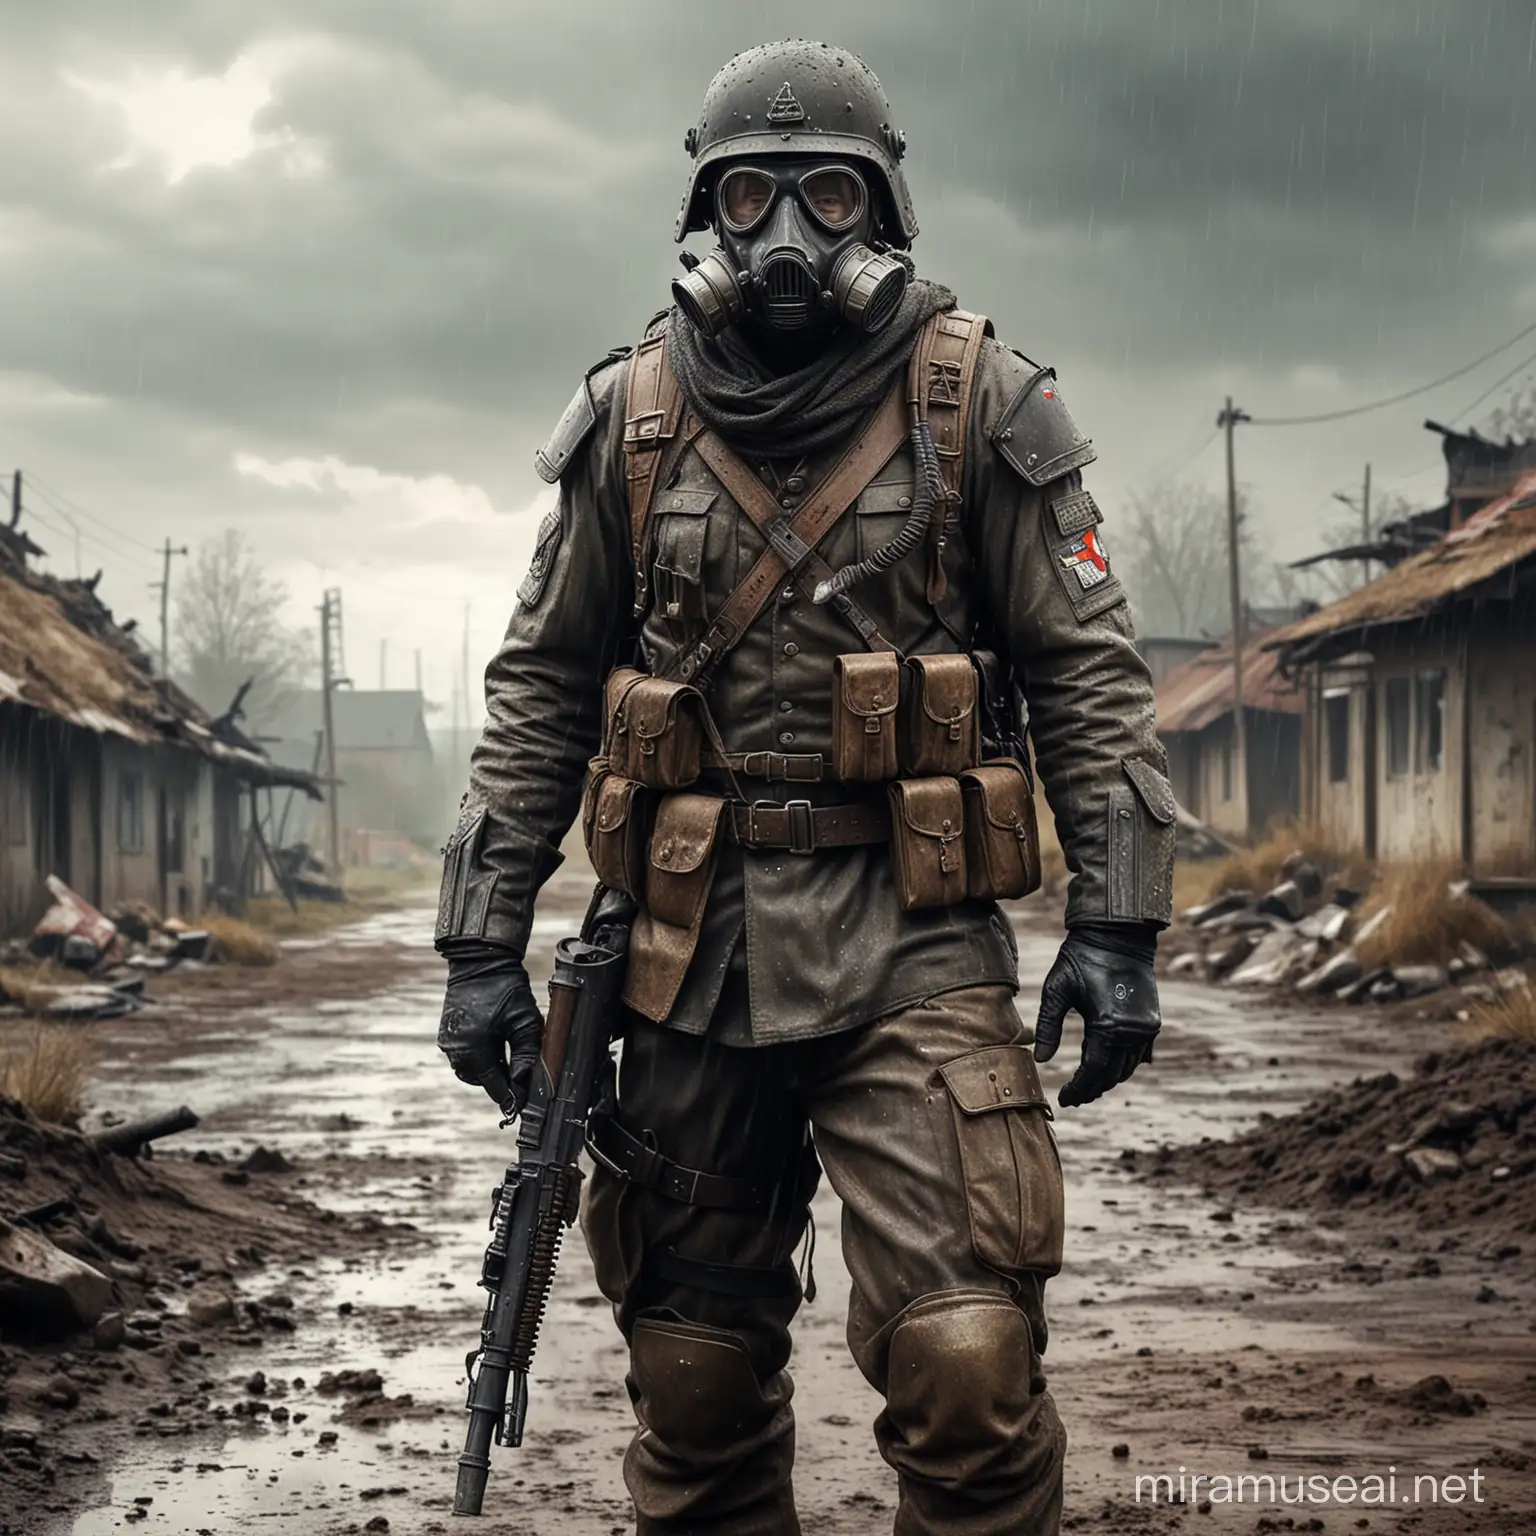 German Soldier in PostApocalyptic Rainy Battlefield